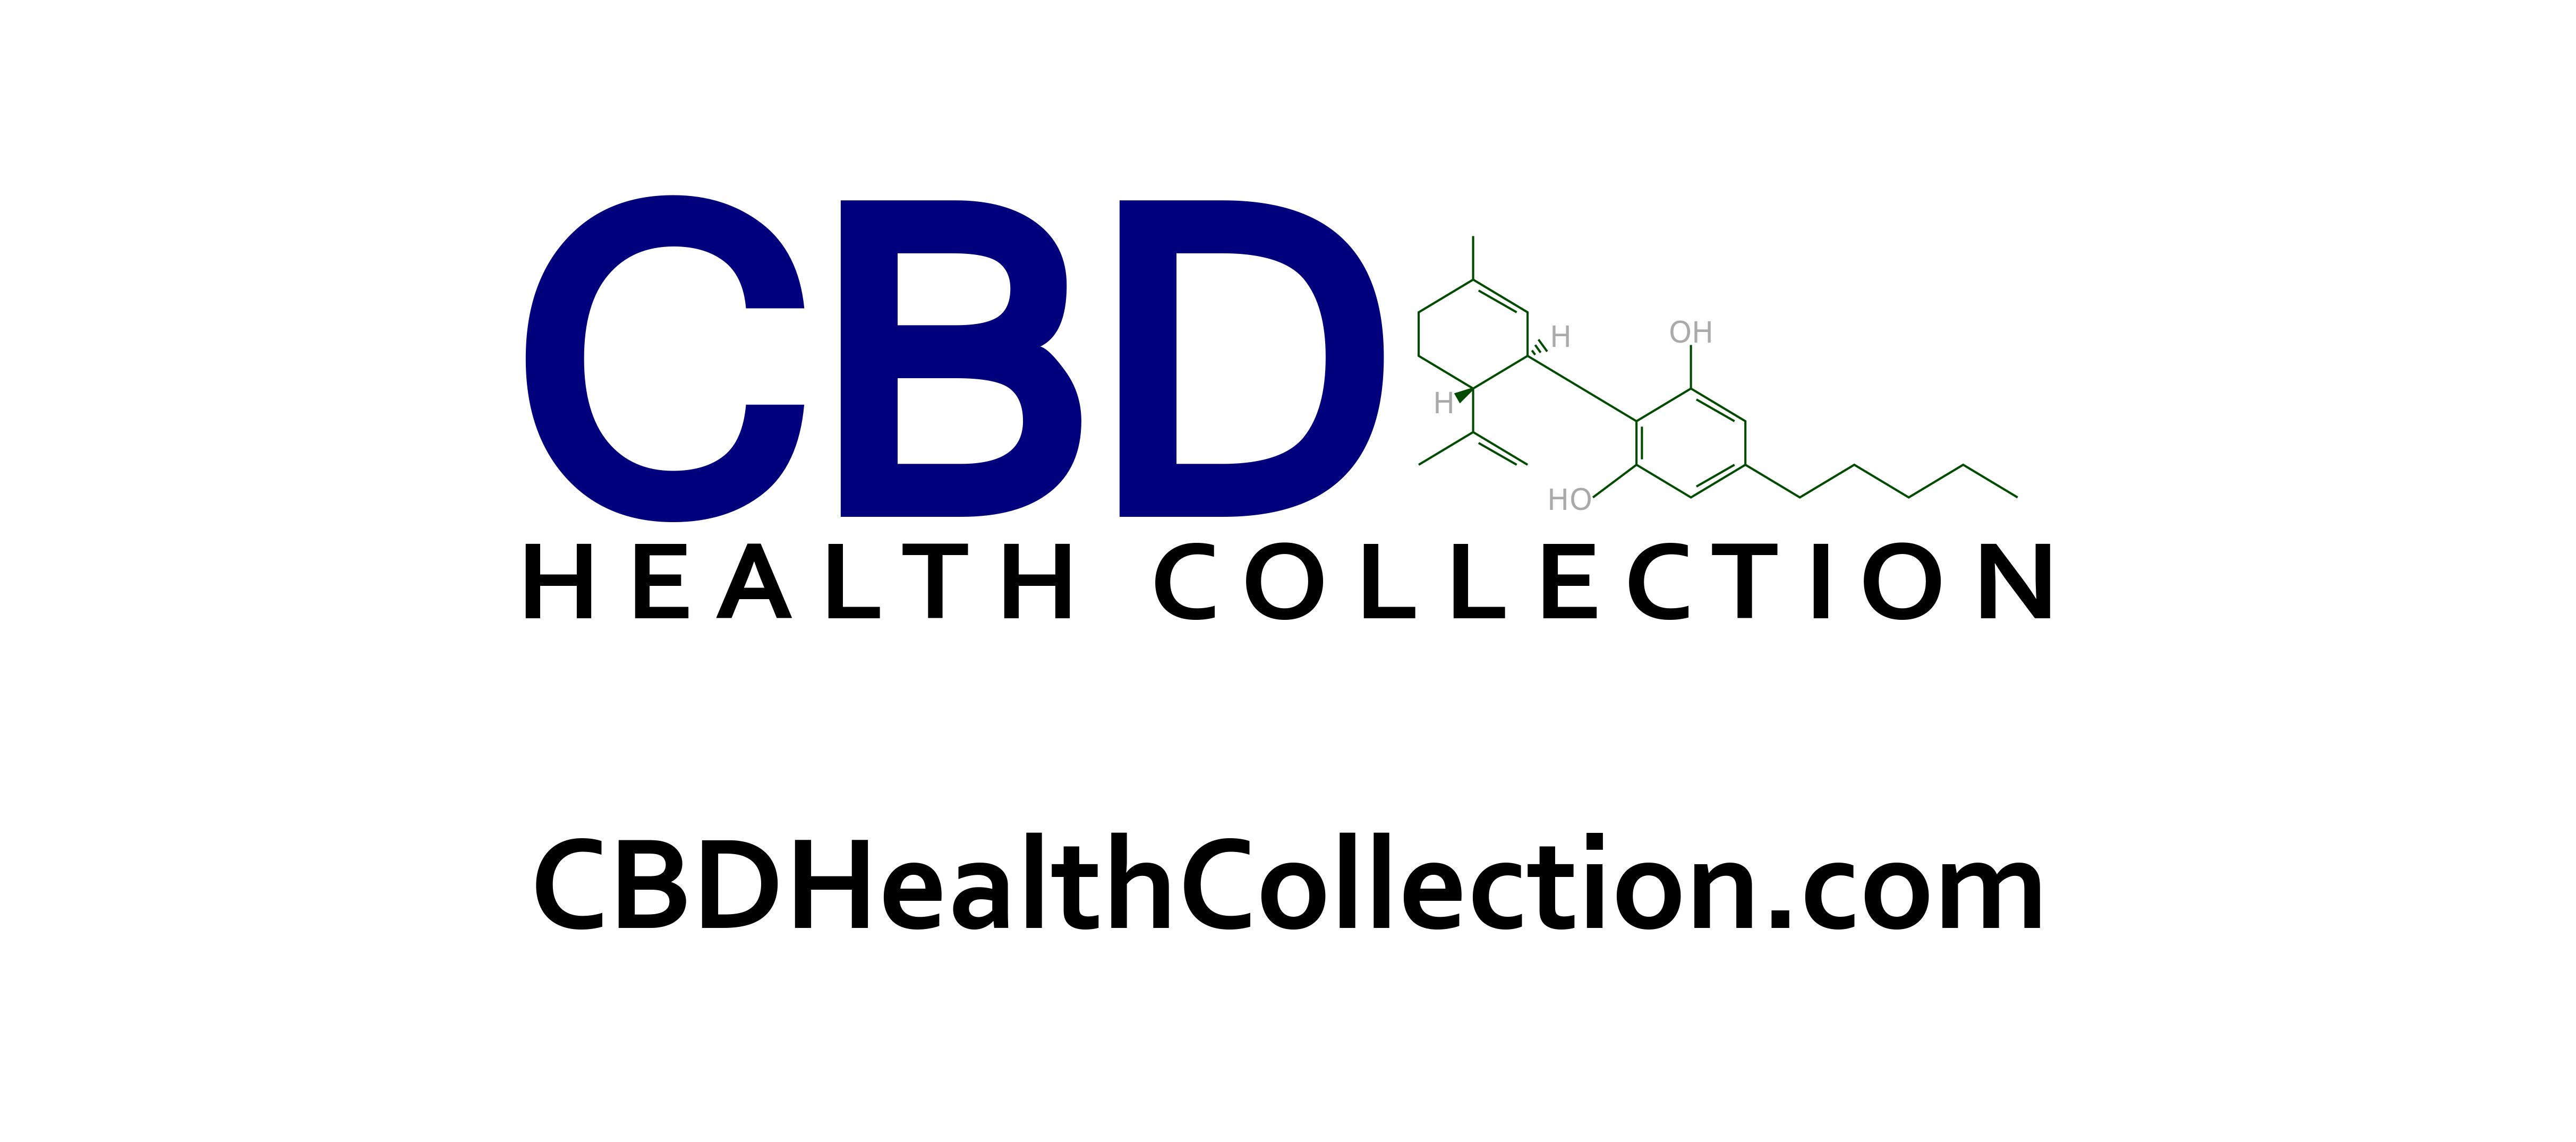 CBDHealthCollection_Logo_with website_FINAL - Rick Bauer